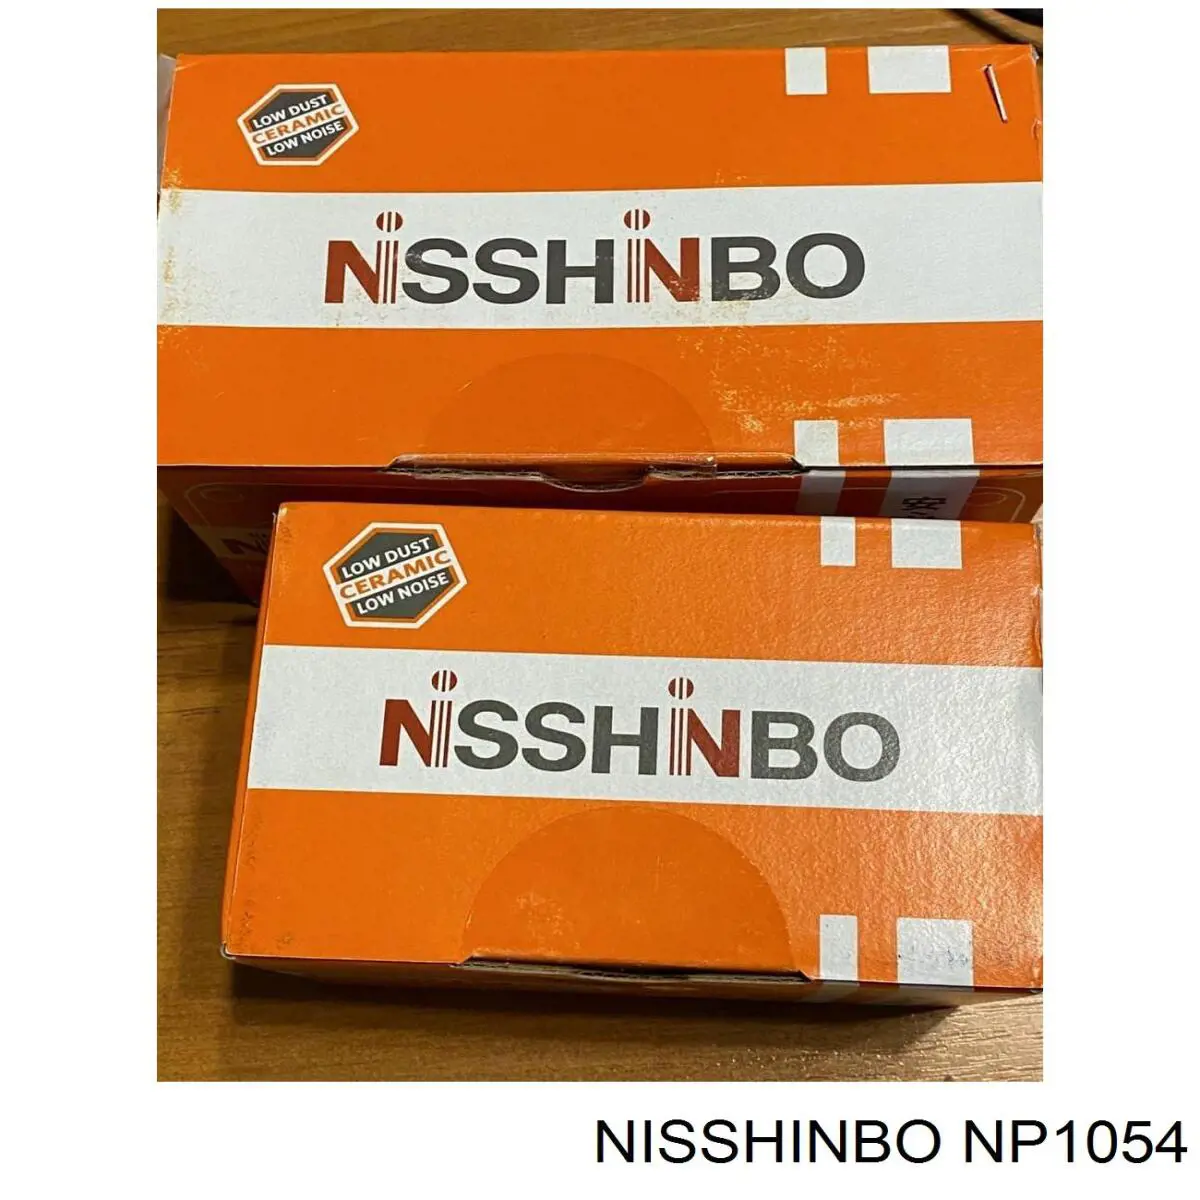 NP1054 Nisshinbo pastillas de freno delanteras